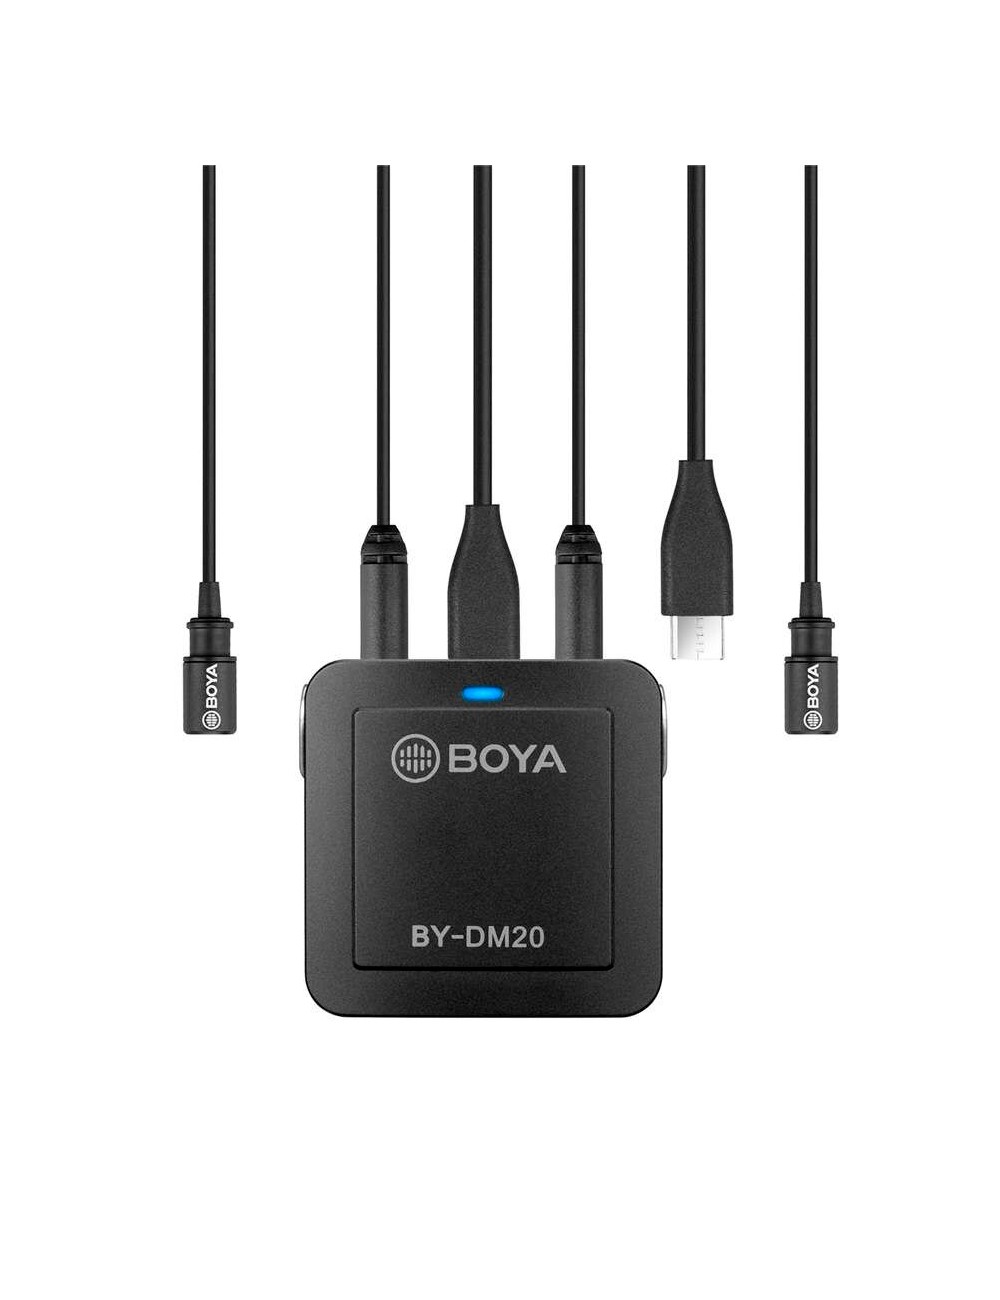 Microfono para Iphone Boya BY-M2D – Foto accesorios